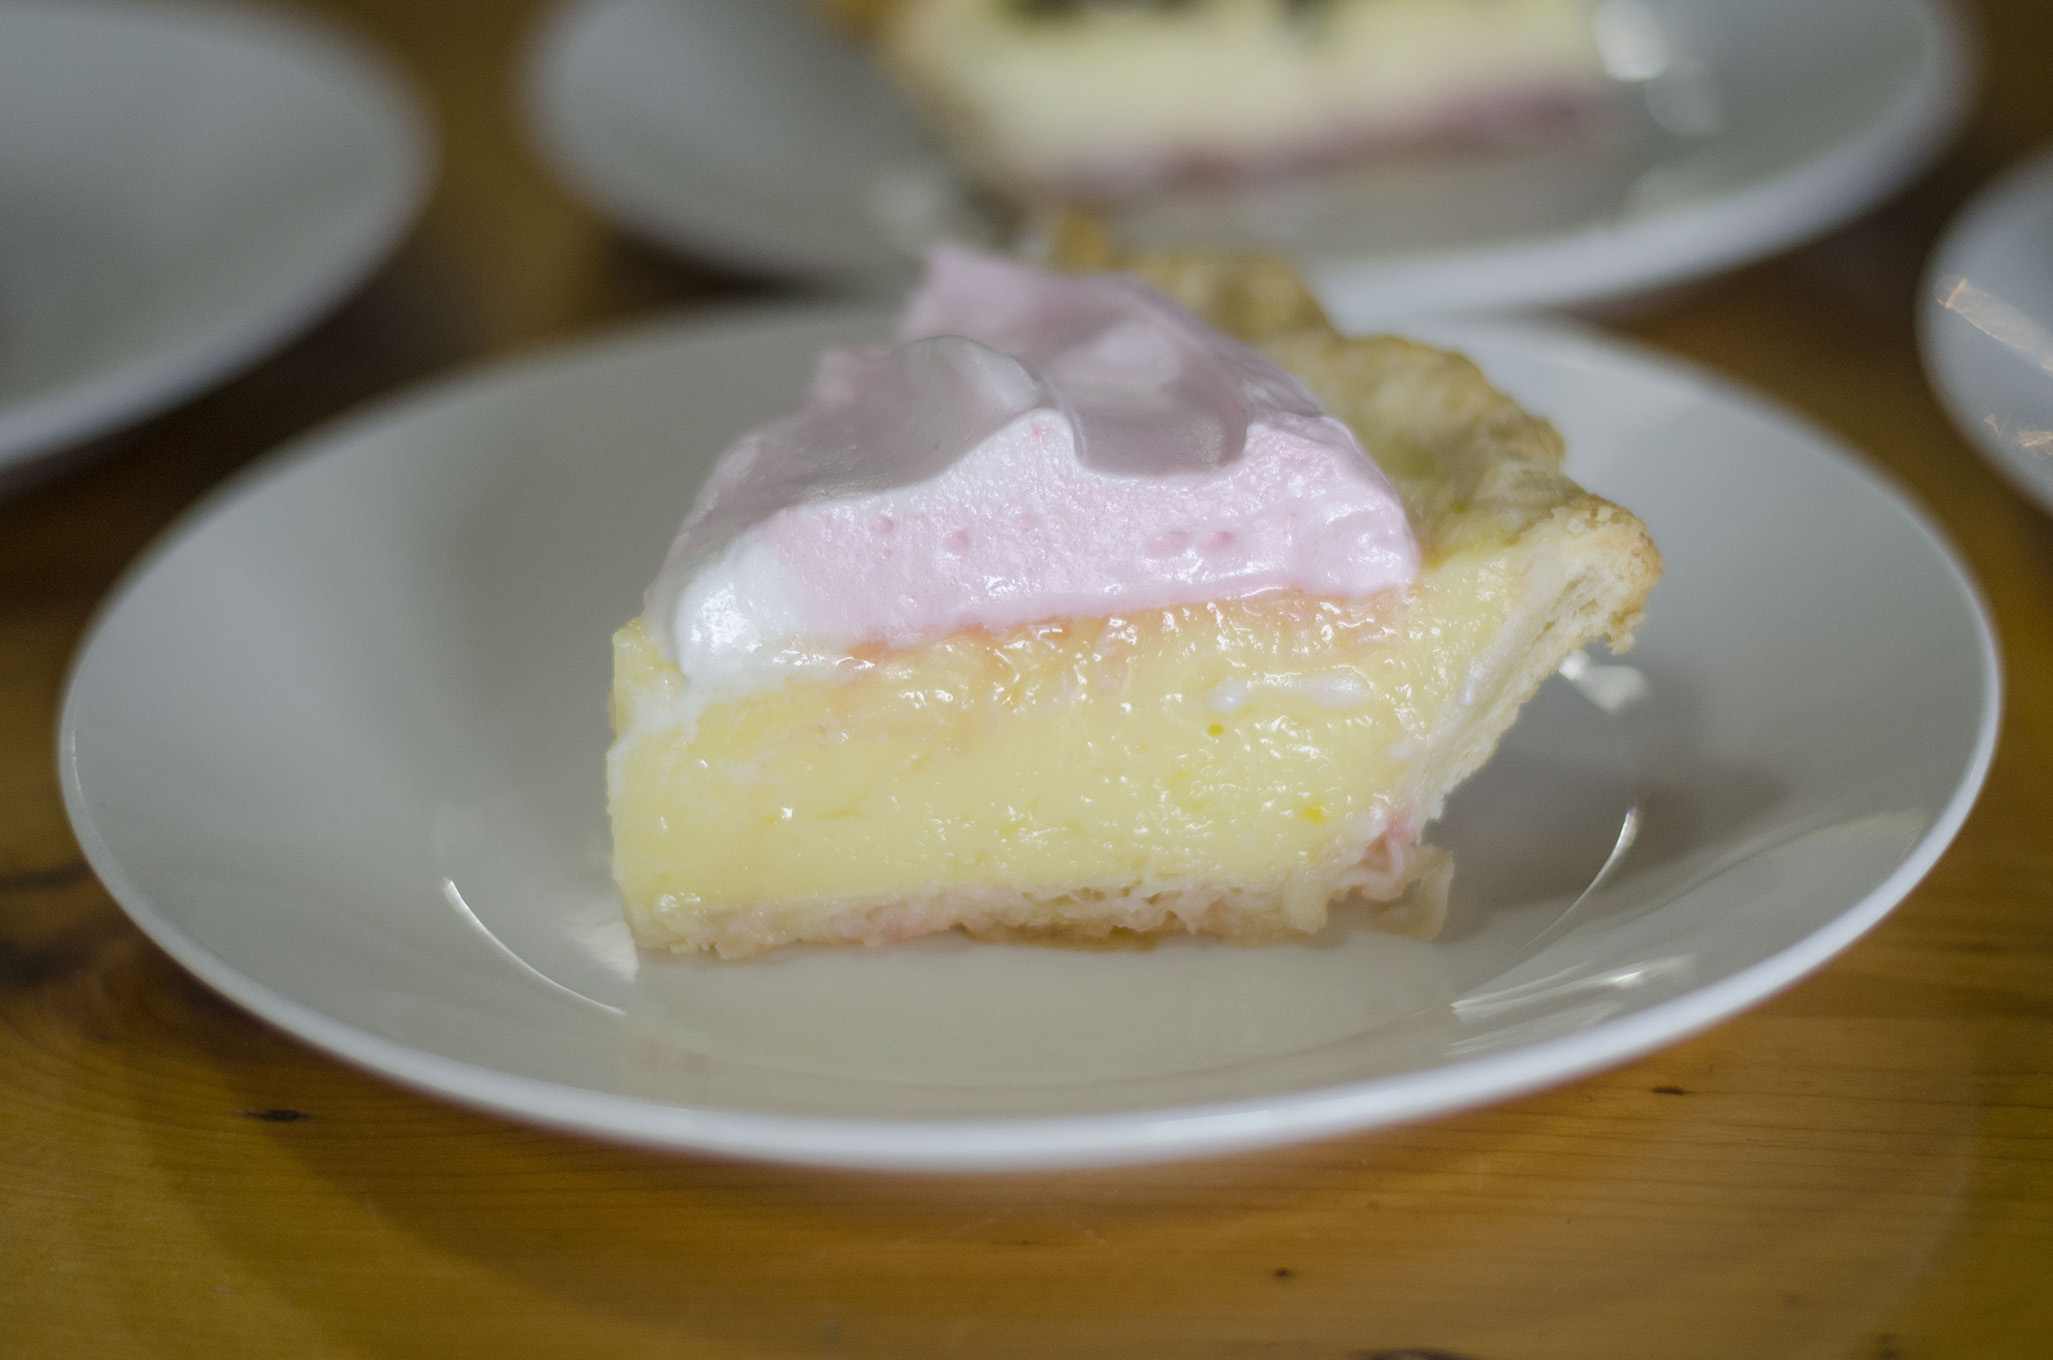 Pink Lemonade Pie from Riverside Pie Cafe in Windsor, Ontario.